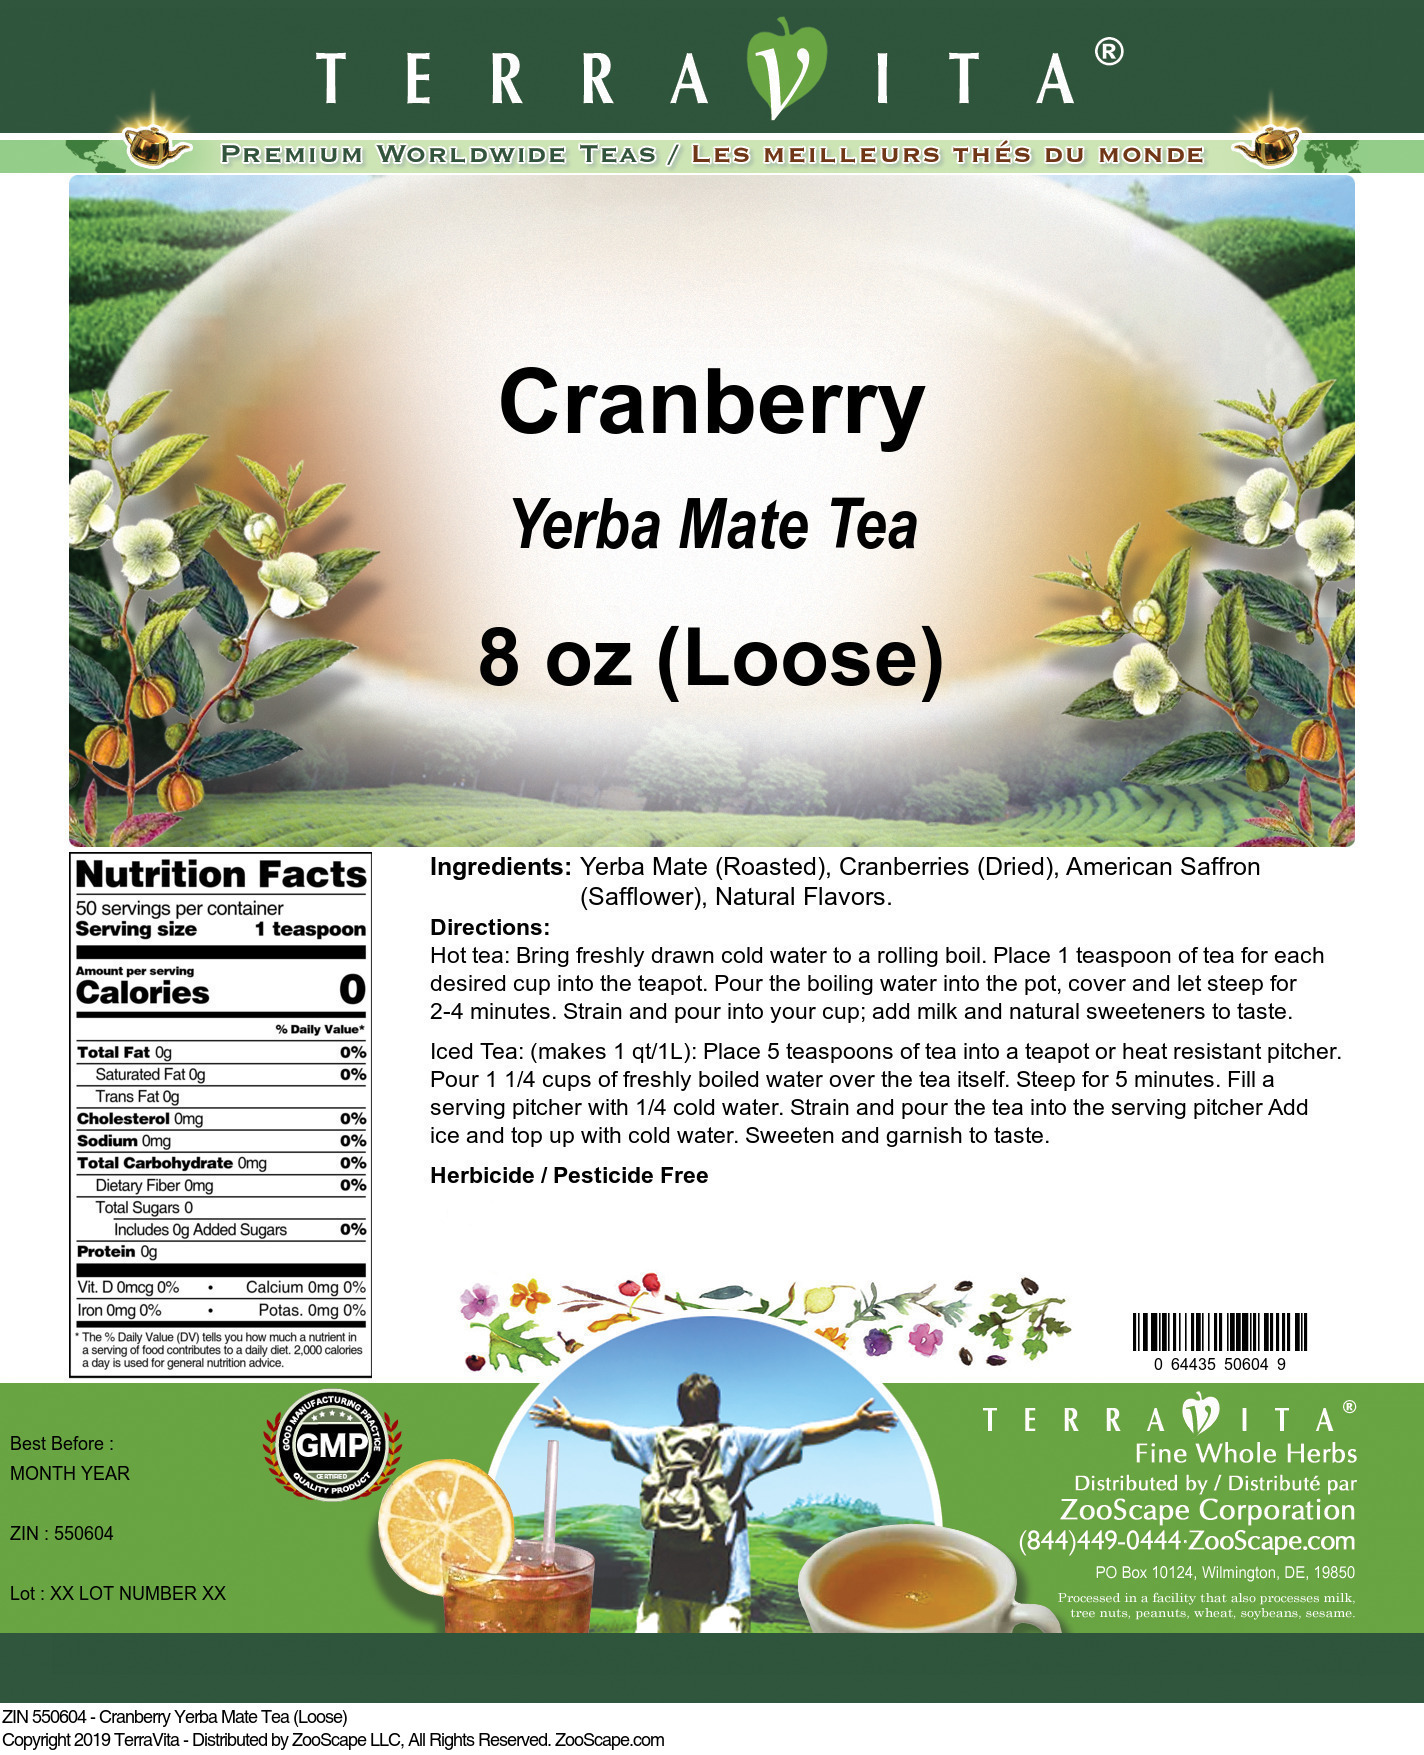 Cranberry Yerba Mate Tea (Loose) - Label